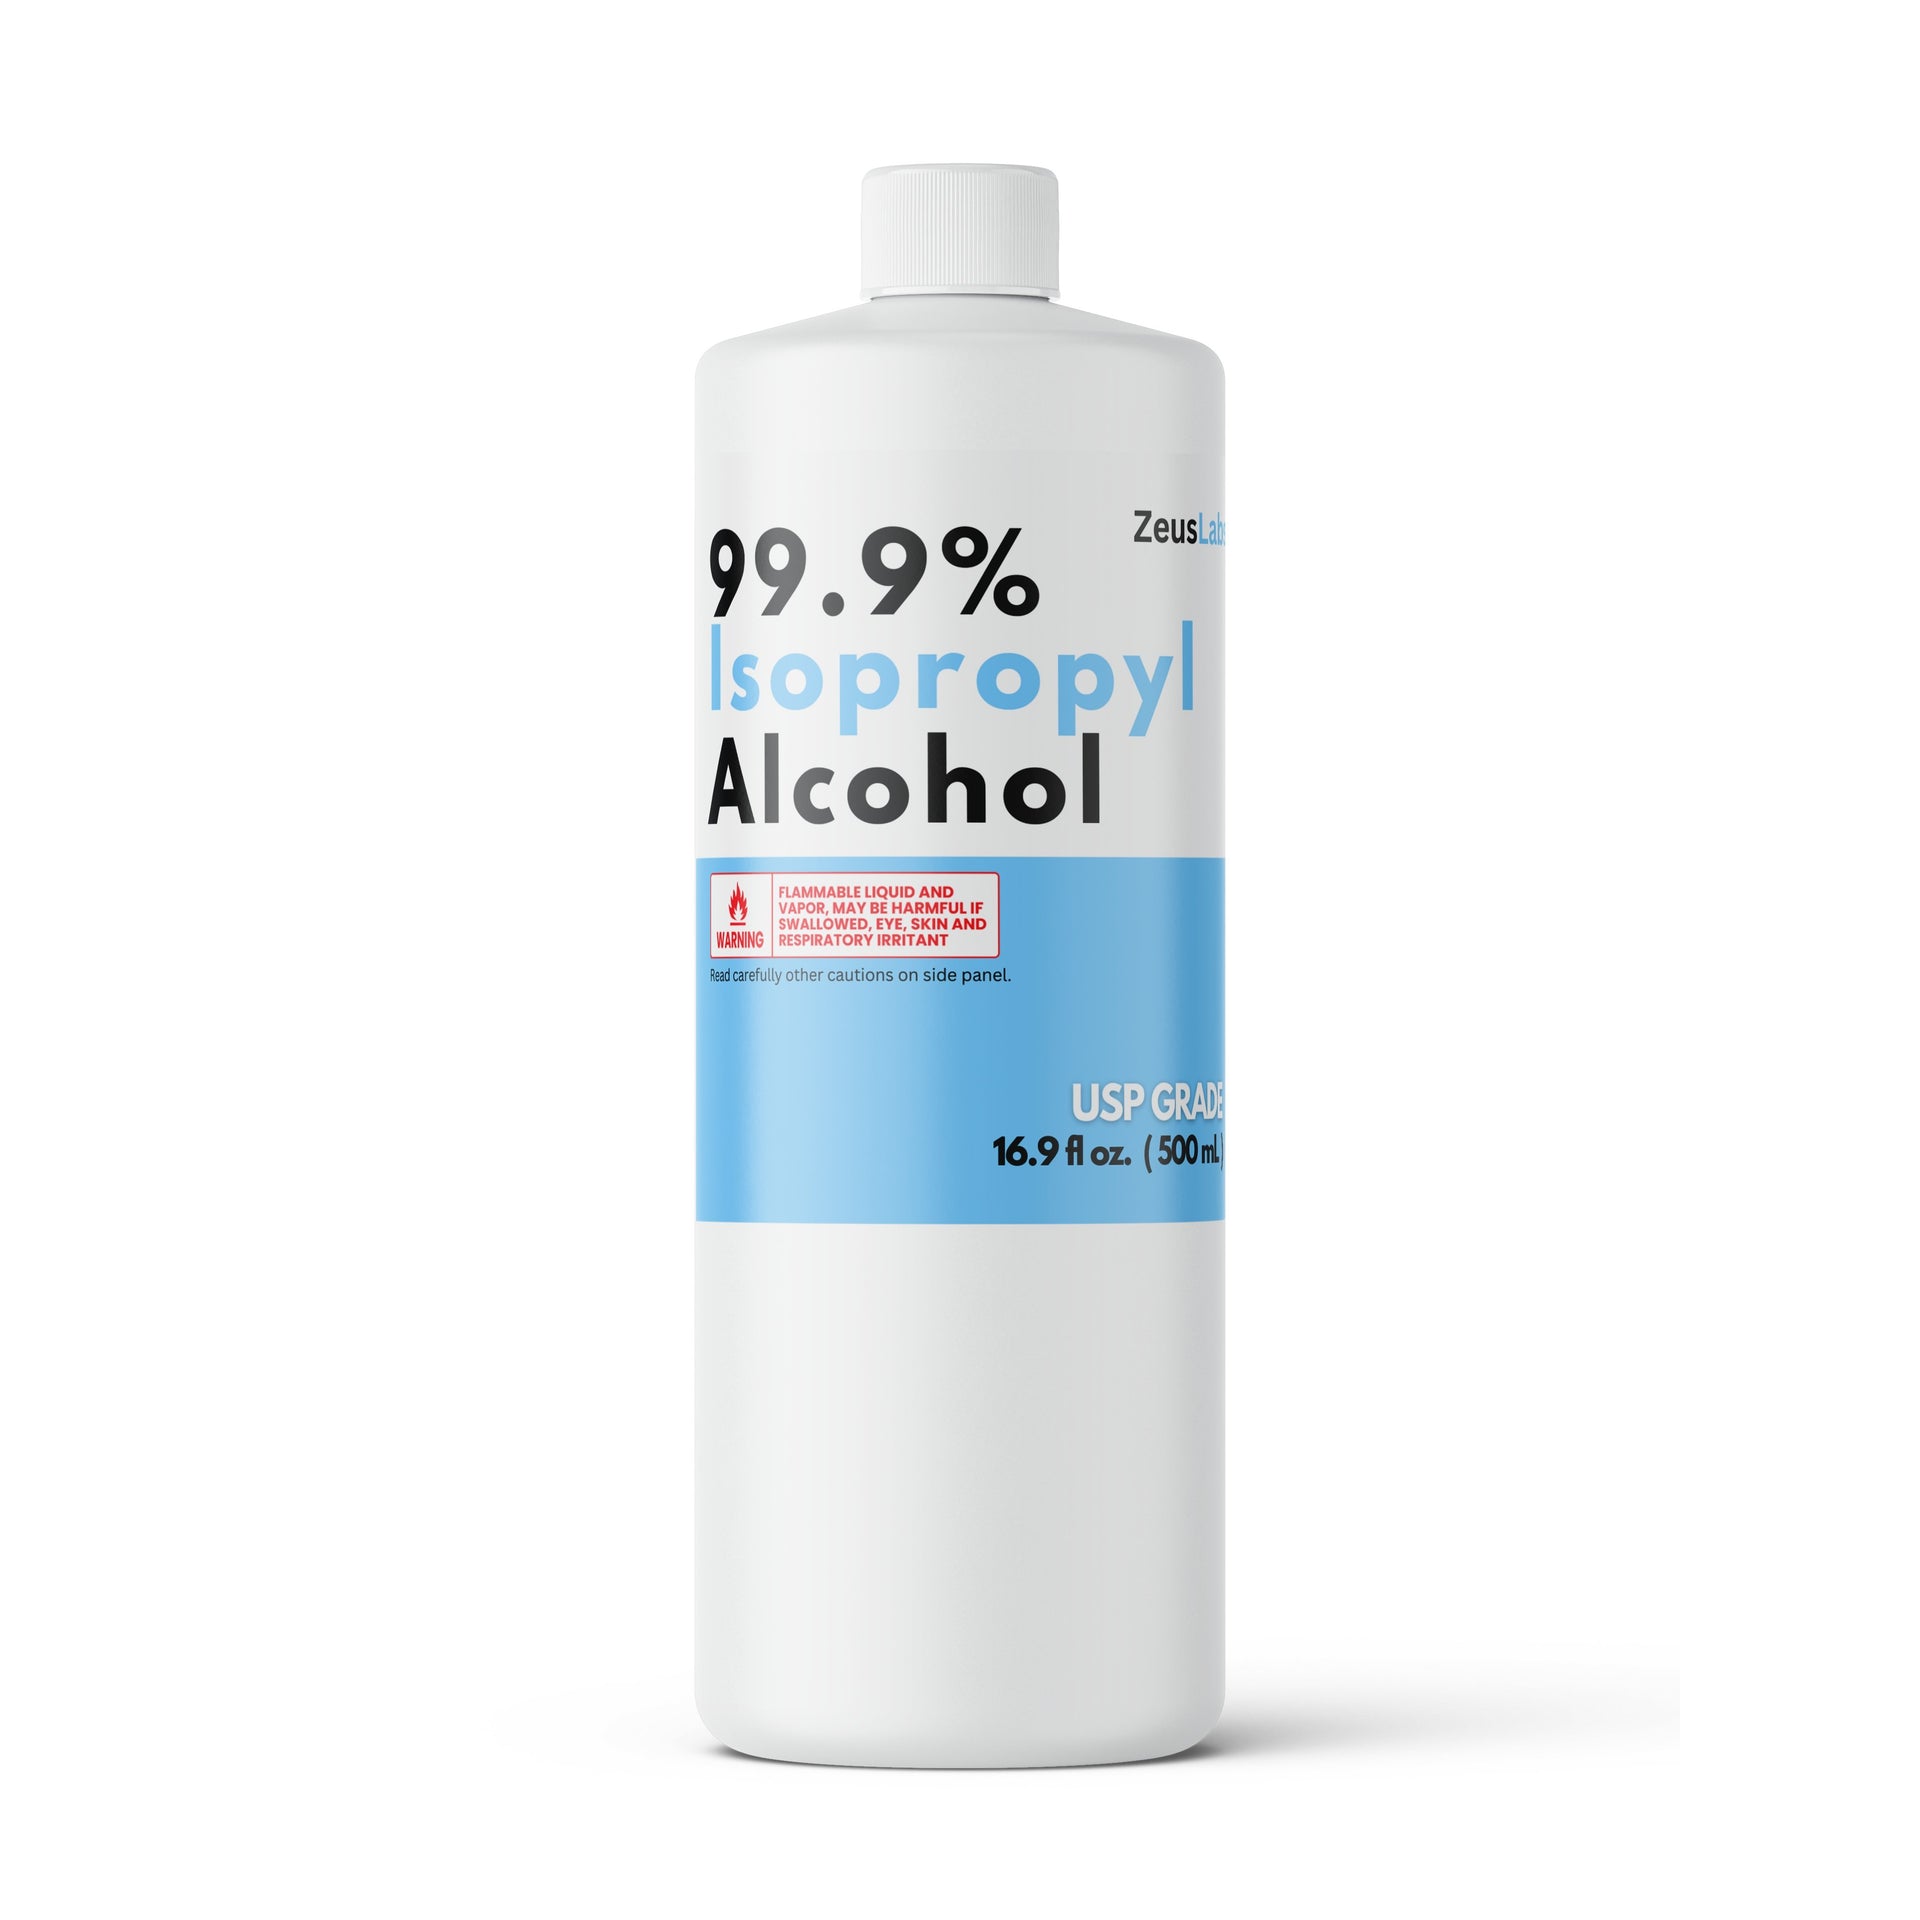 ISOPROPYL ALCOHOL 99.9%